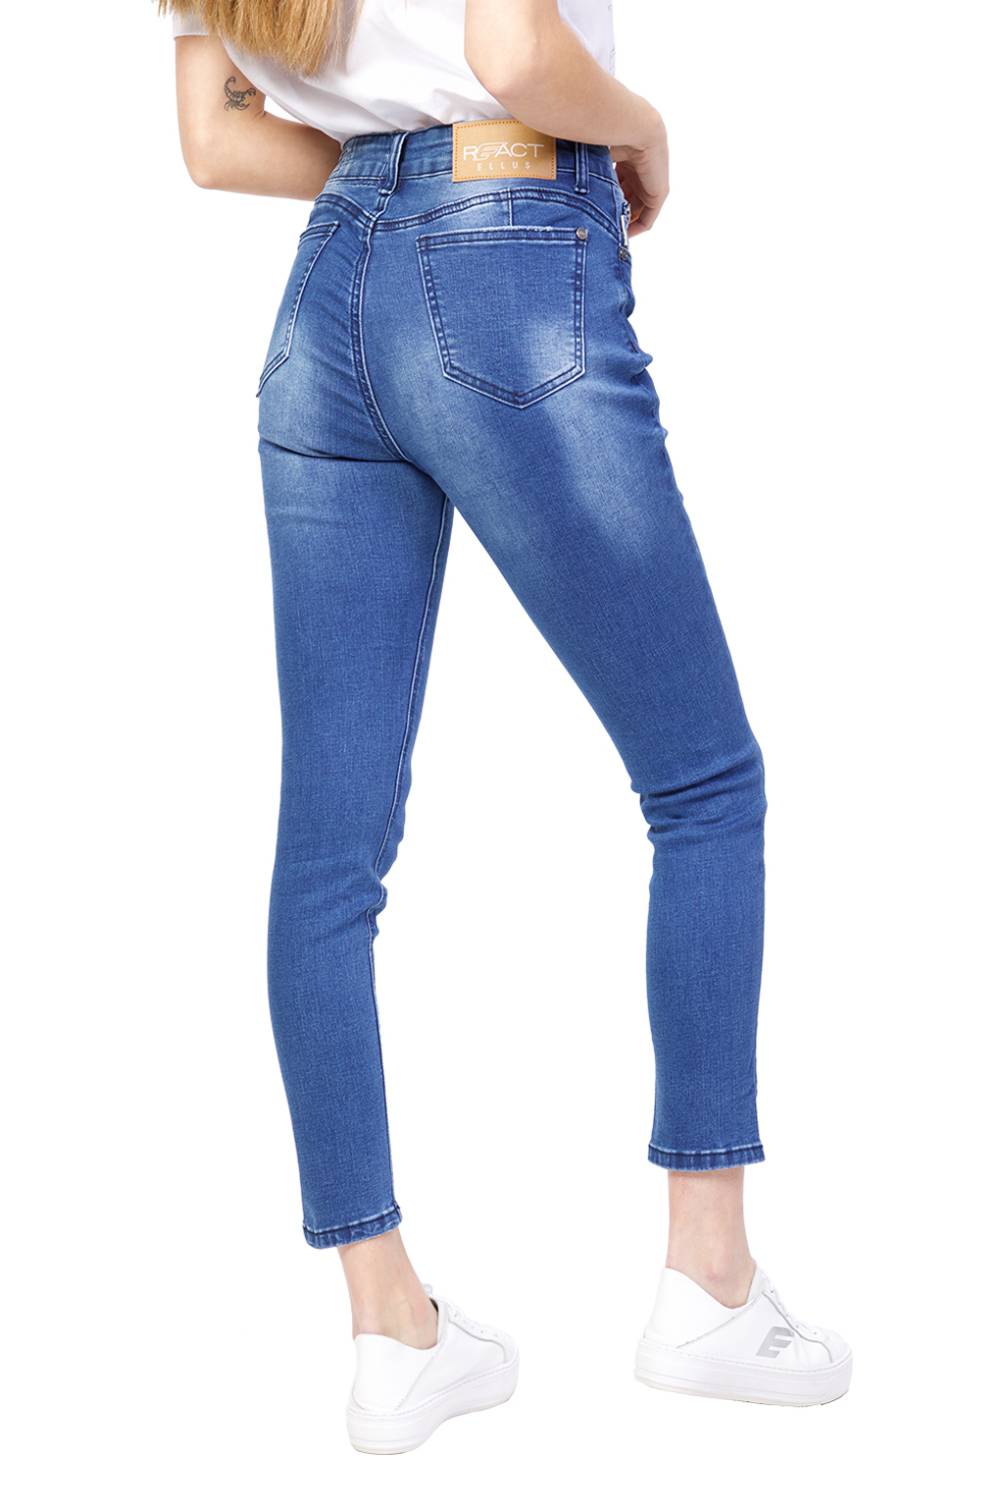 ELLUS - Ellus Jeans Skinny Tiro Alto Mujer